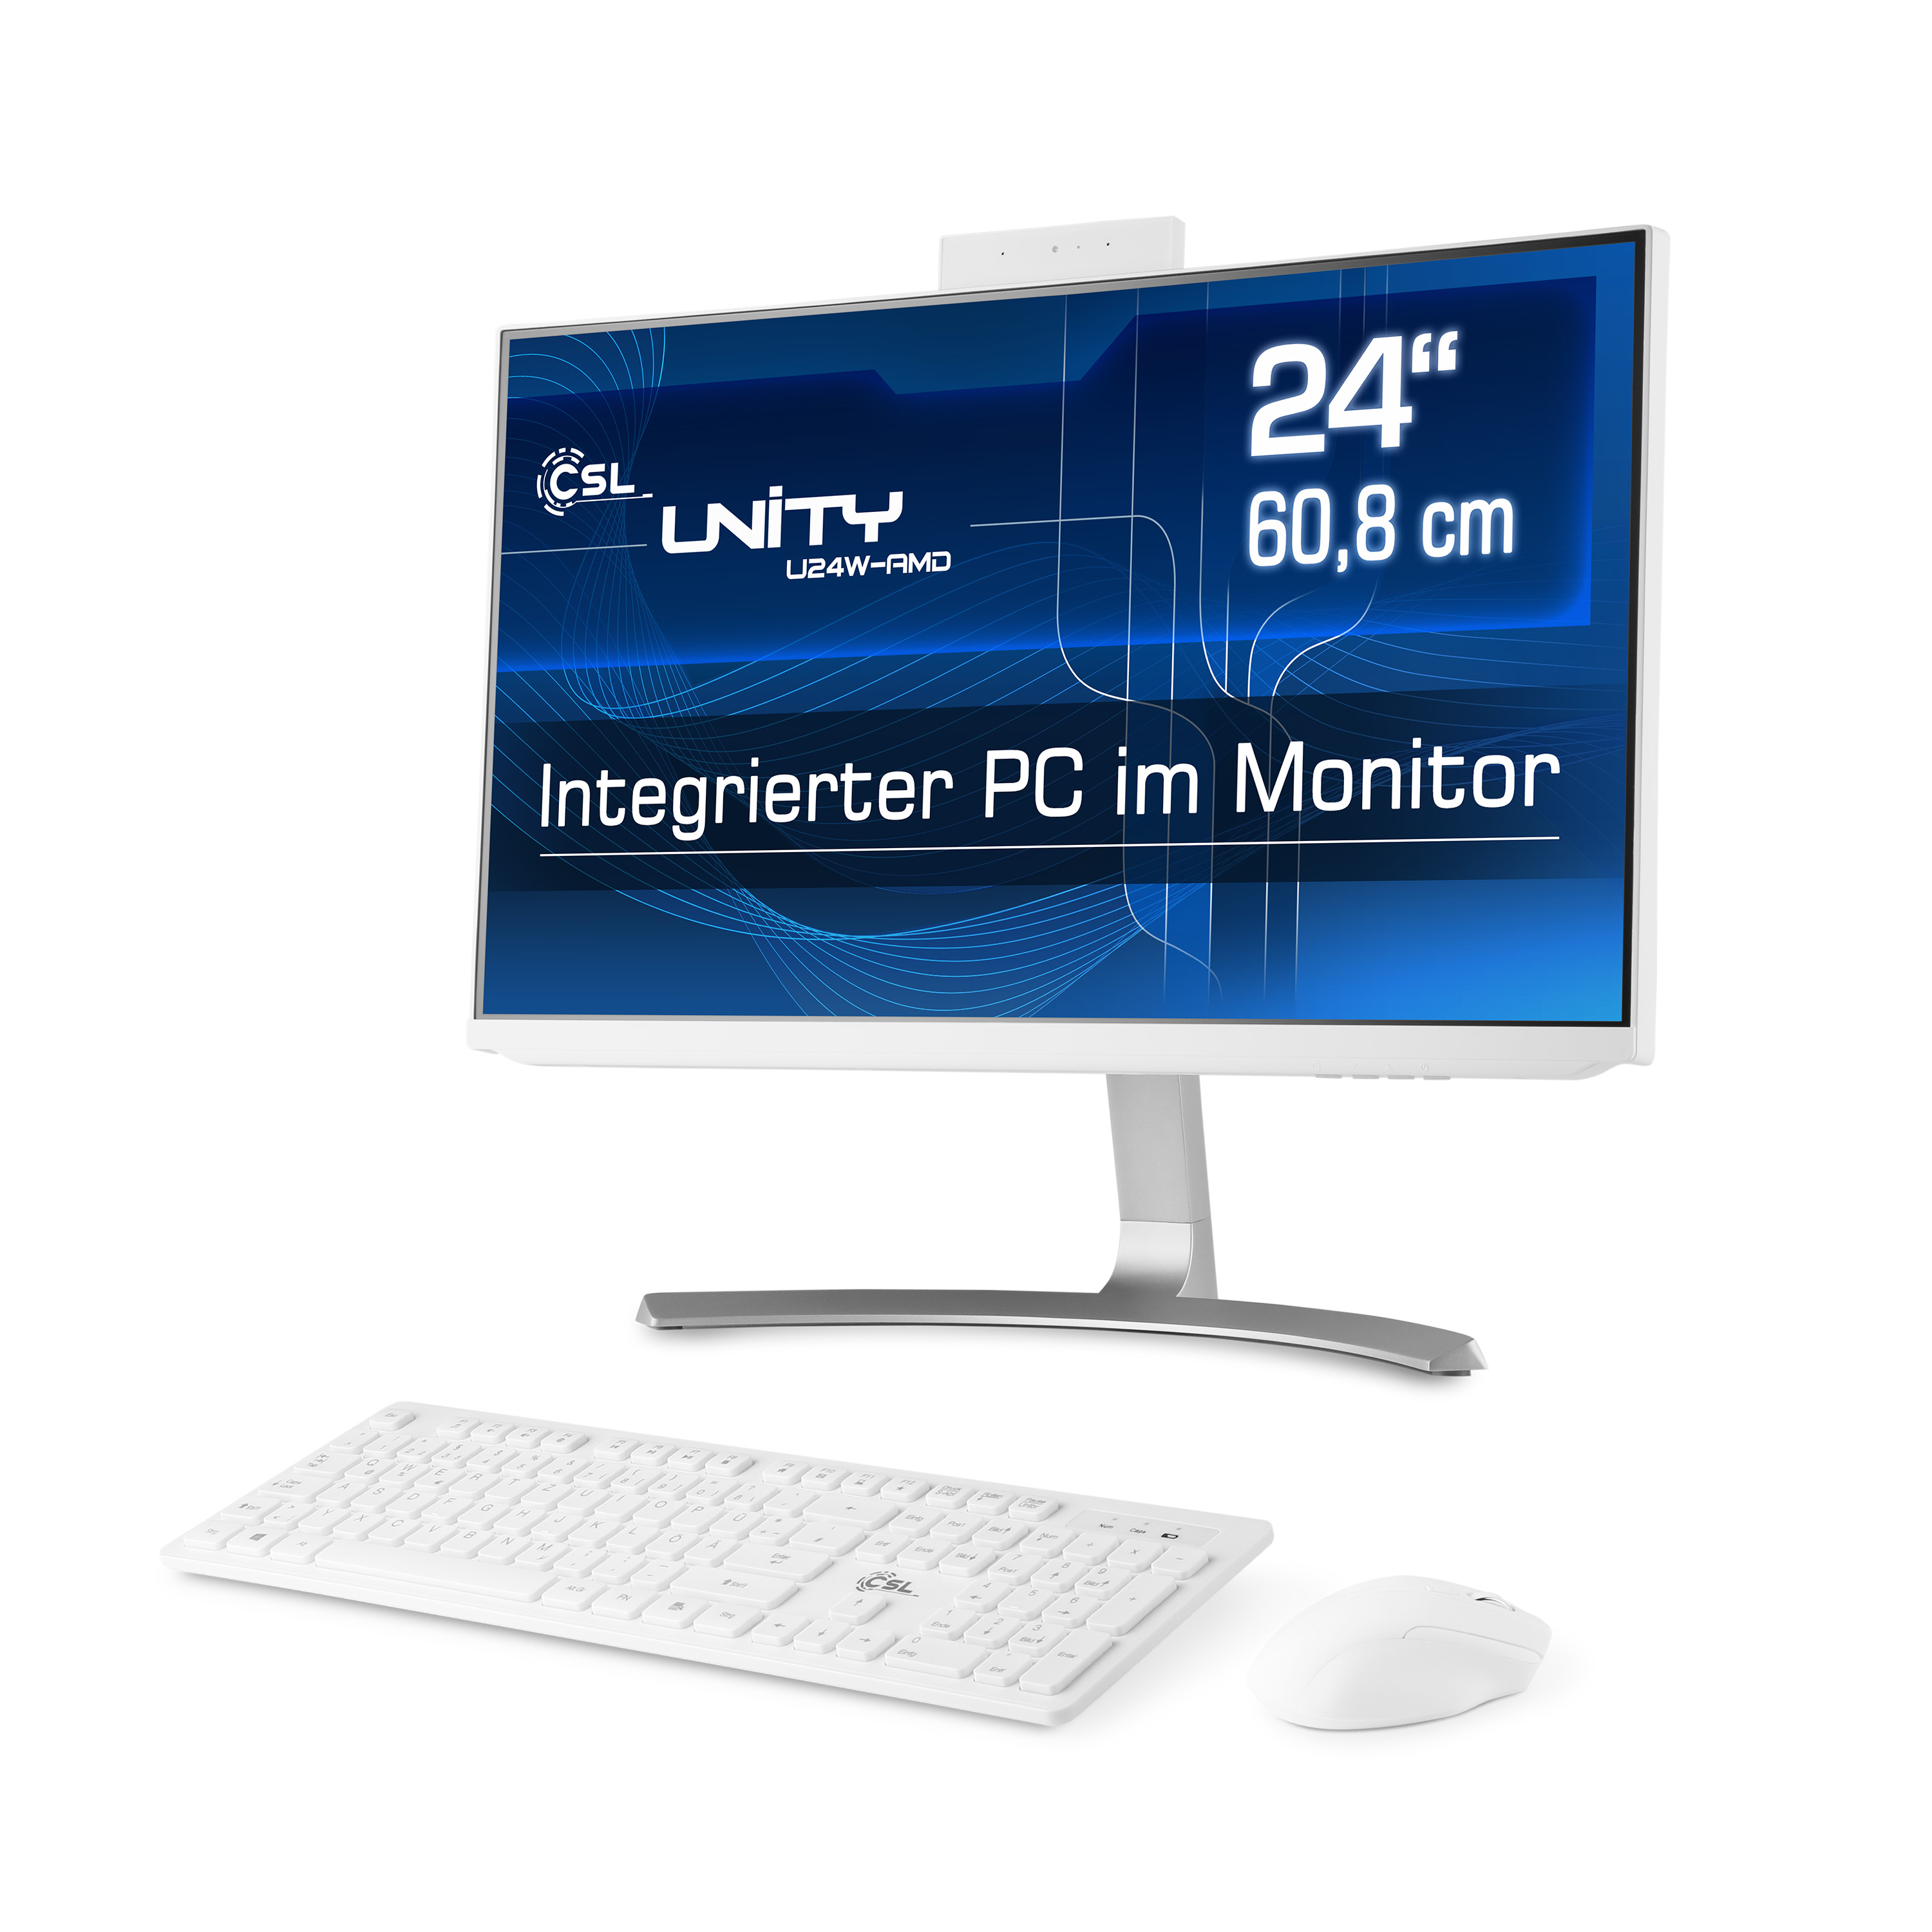 CSL Unity U24W-AMD / GB GB All-in-One-PC Radeon Graphics, 24 RAM, GB SSD, GB RAM, AMD / 16 Zoll 16 5700G 1000 Display, 1000 mit weiß 